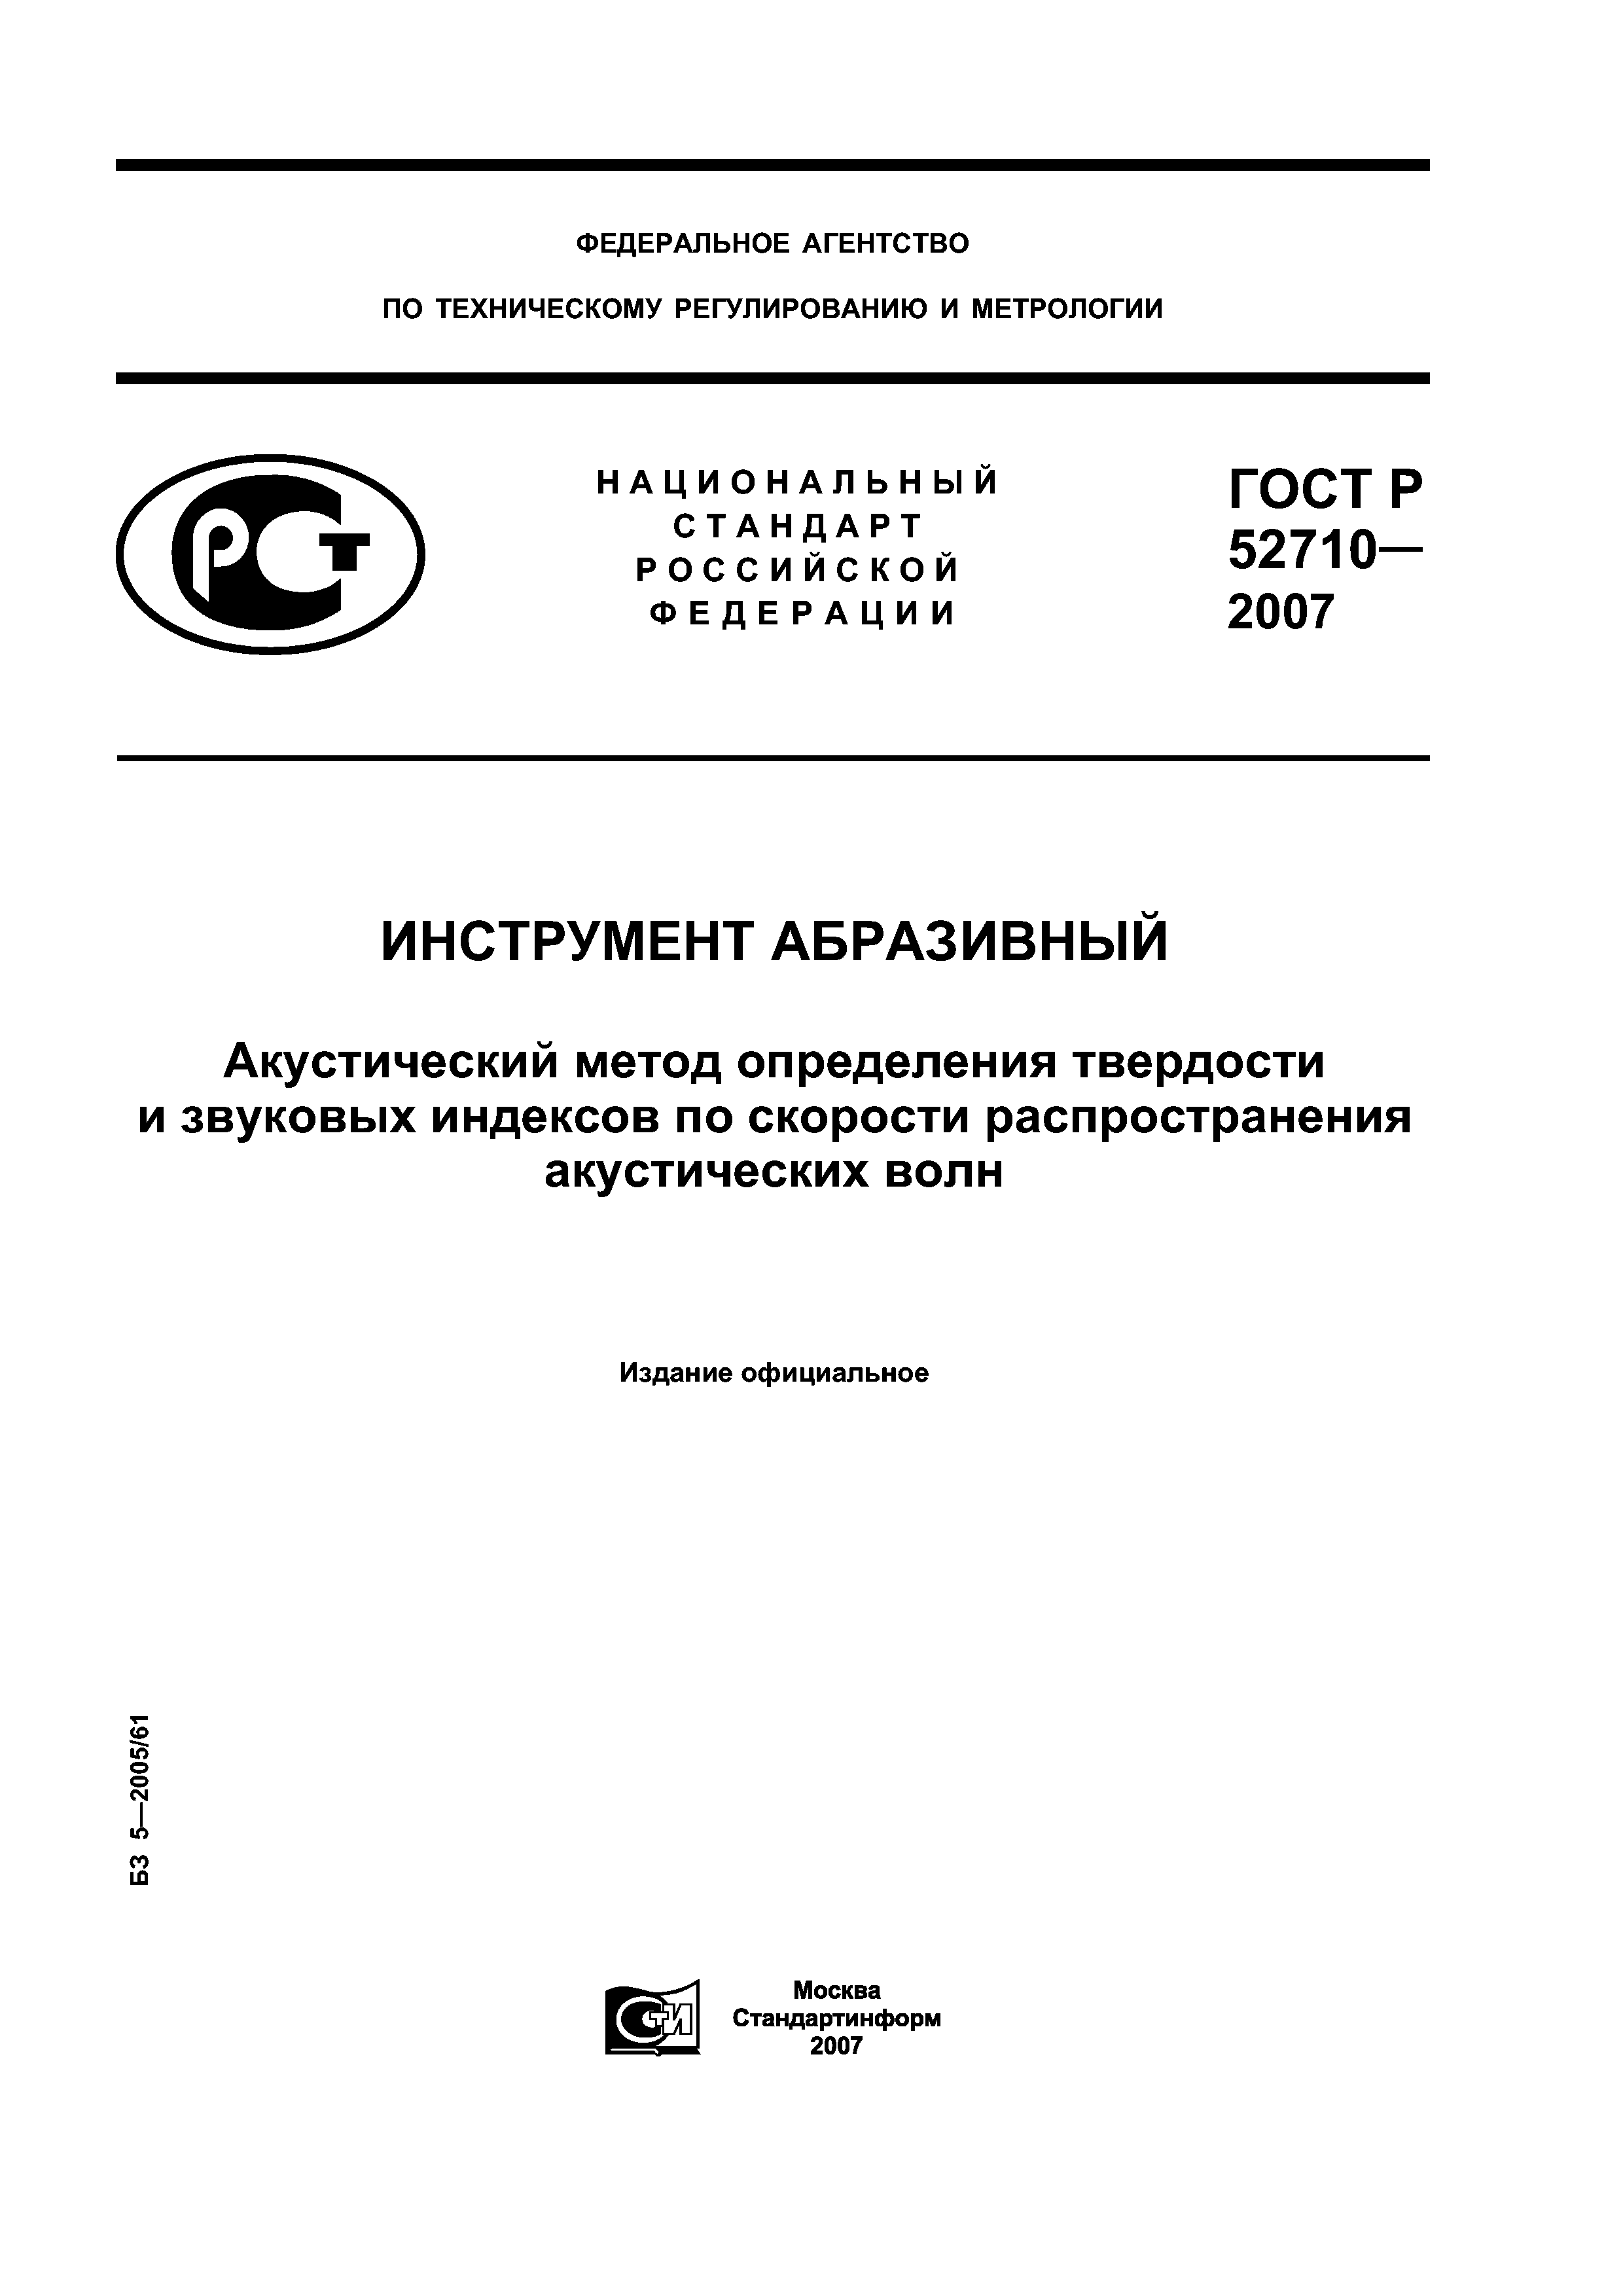 ГОСТ Р 52710-2007